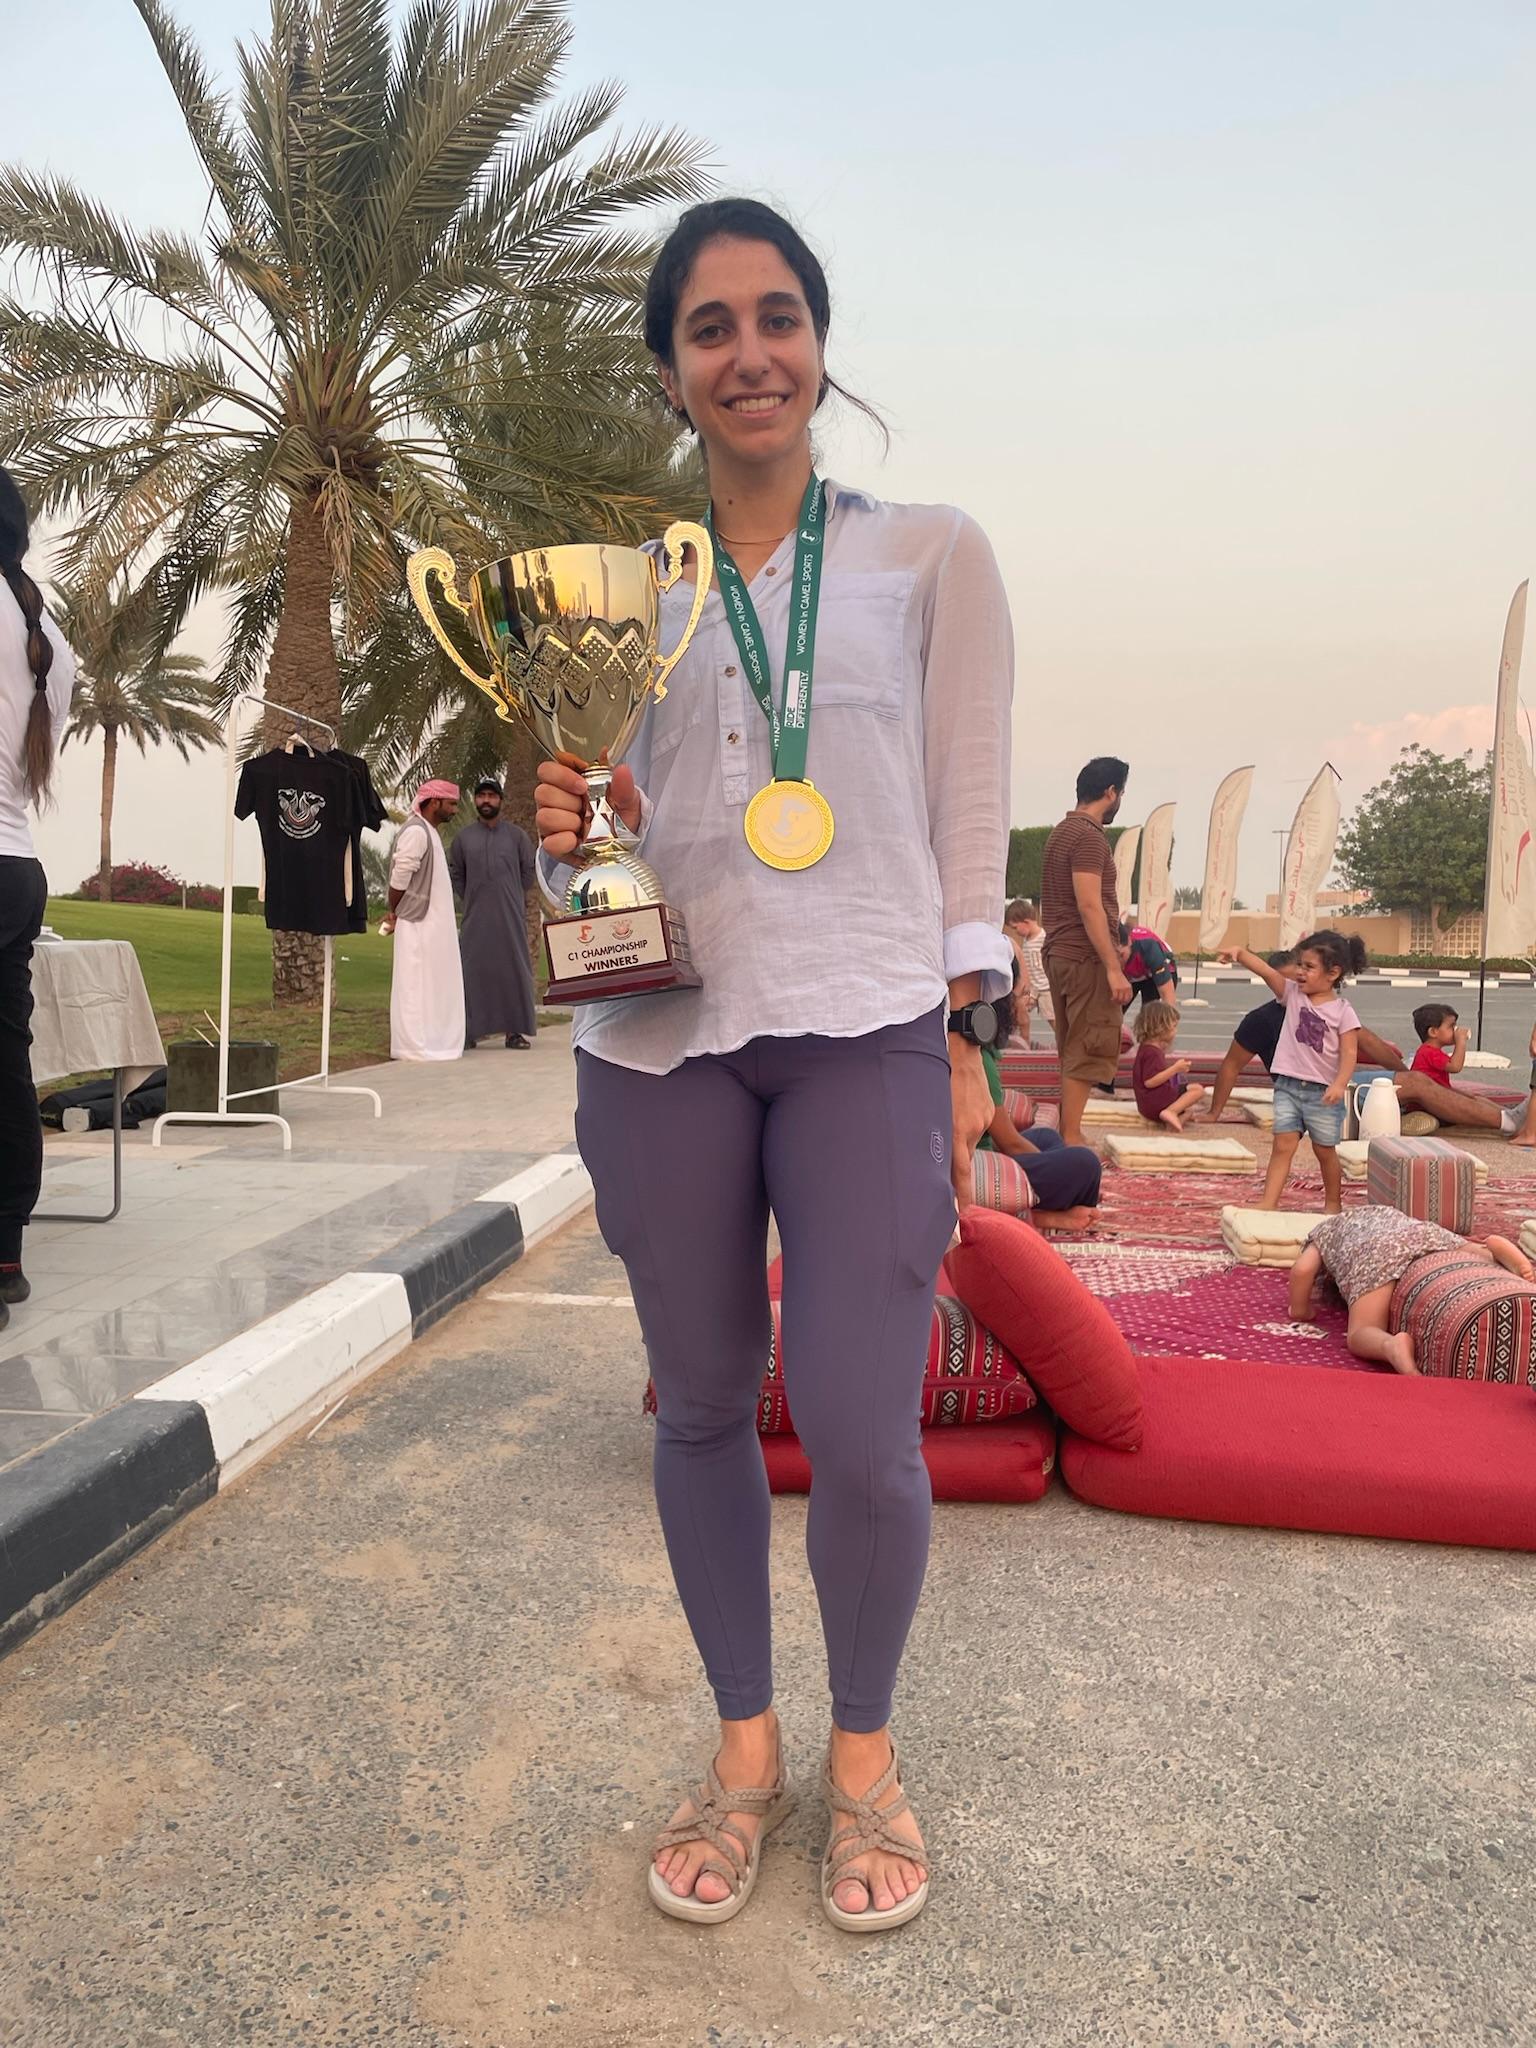 winner of camel race holds a trophy